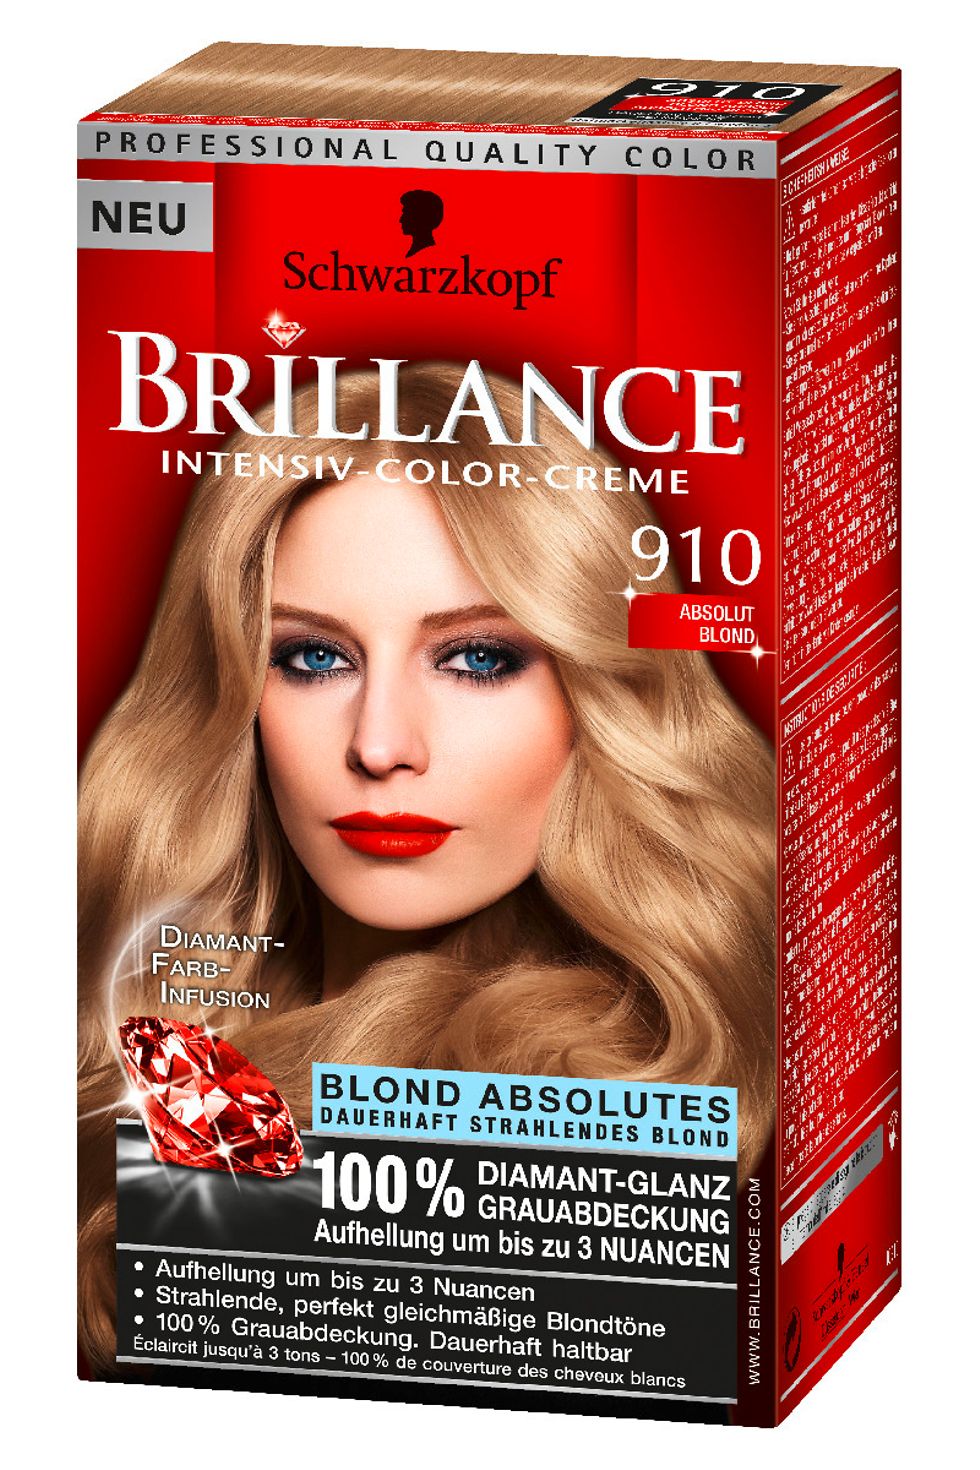 Brillance Blond Absolutes 910 Absolut Blond